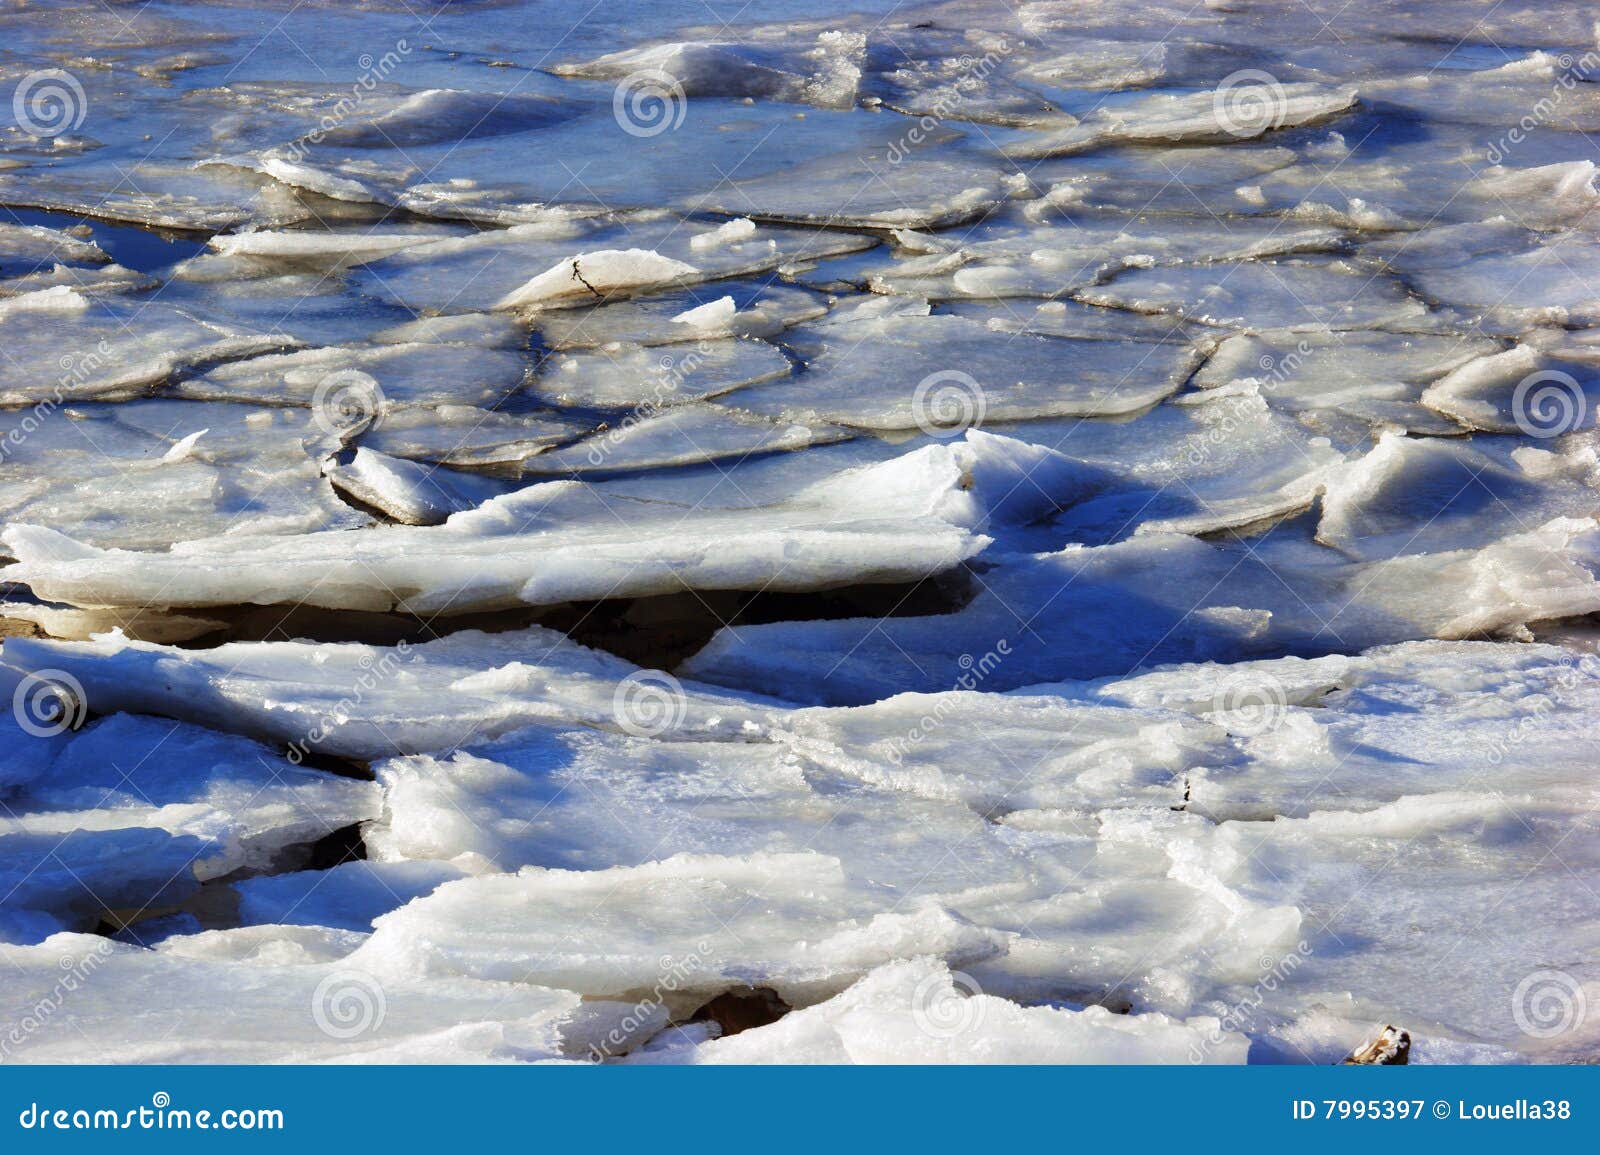 tides breaking ice shoreline